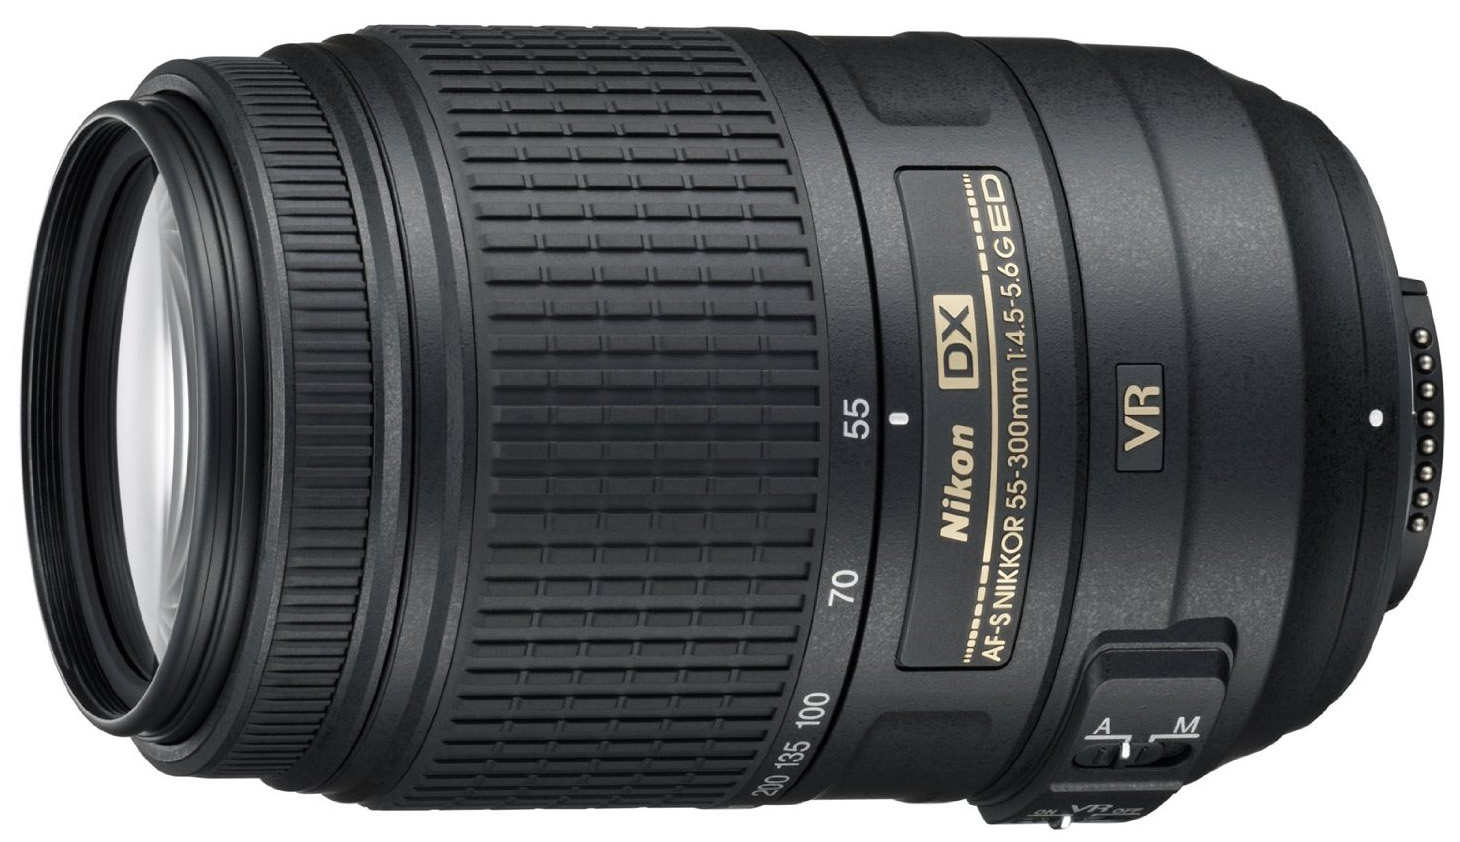 Nikon 55-300mm lens